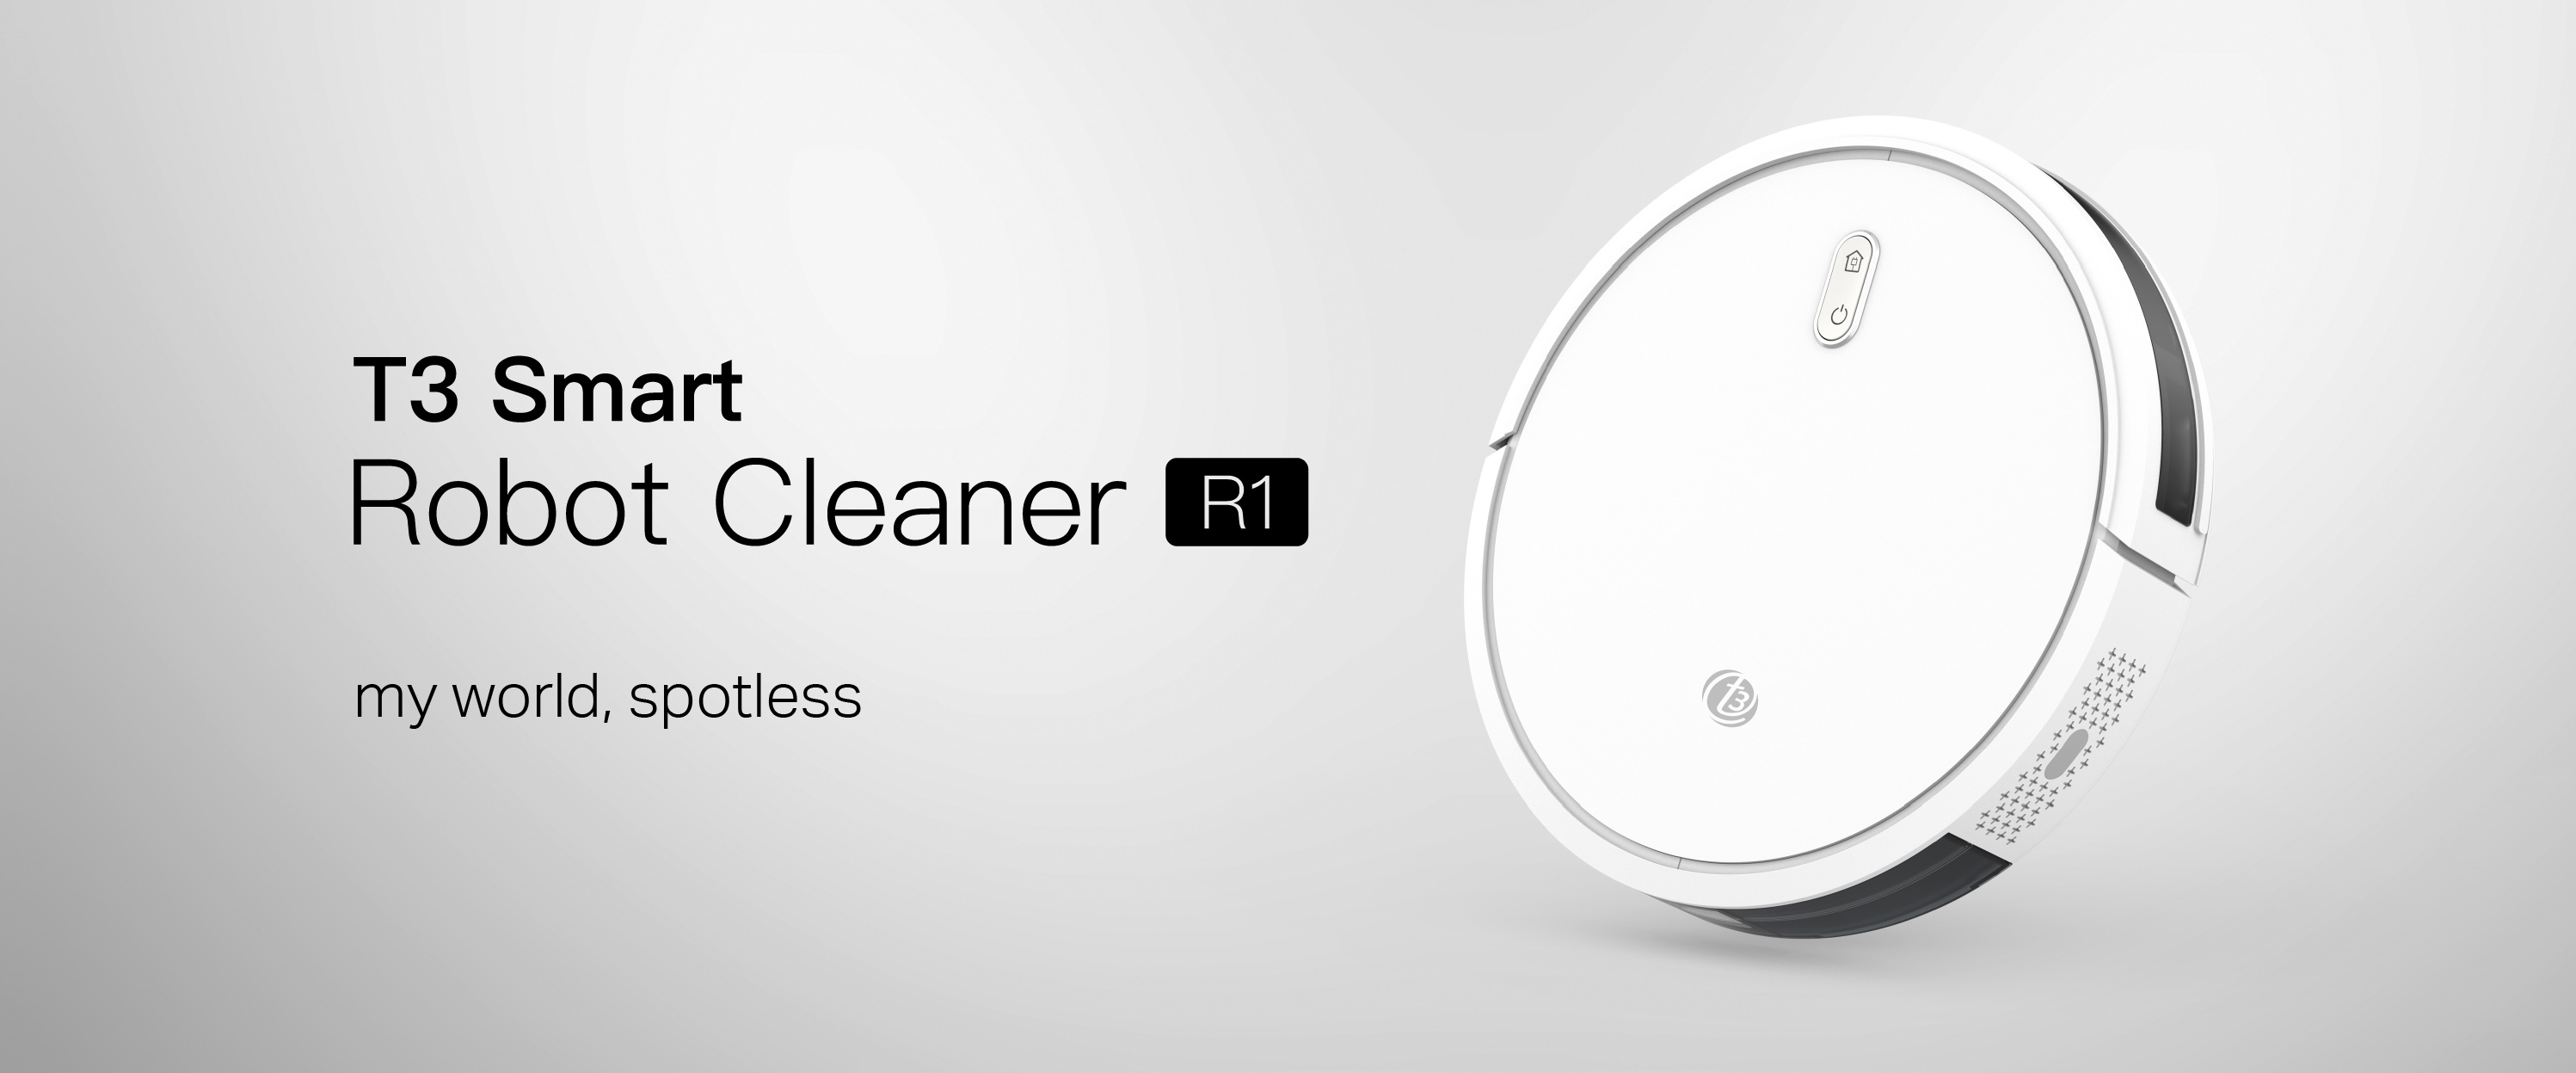 T3 Smart Robot Cleaner R1